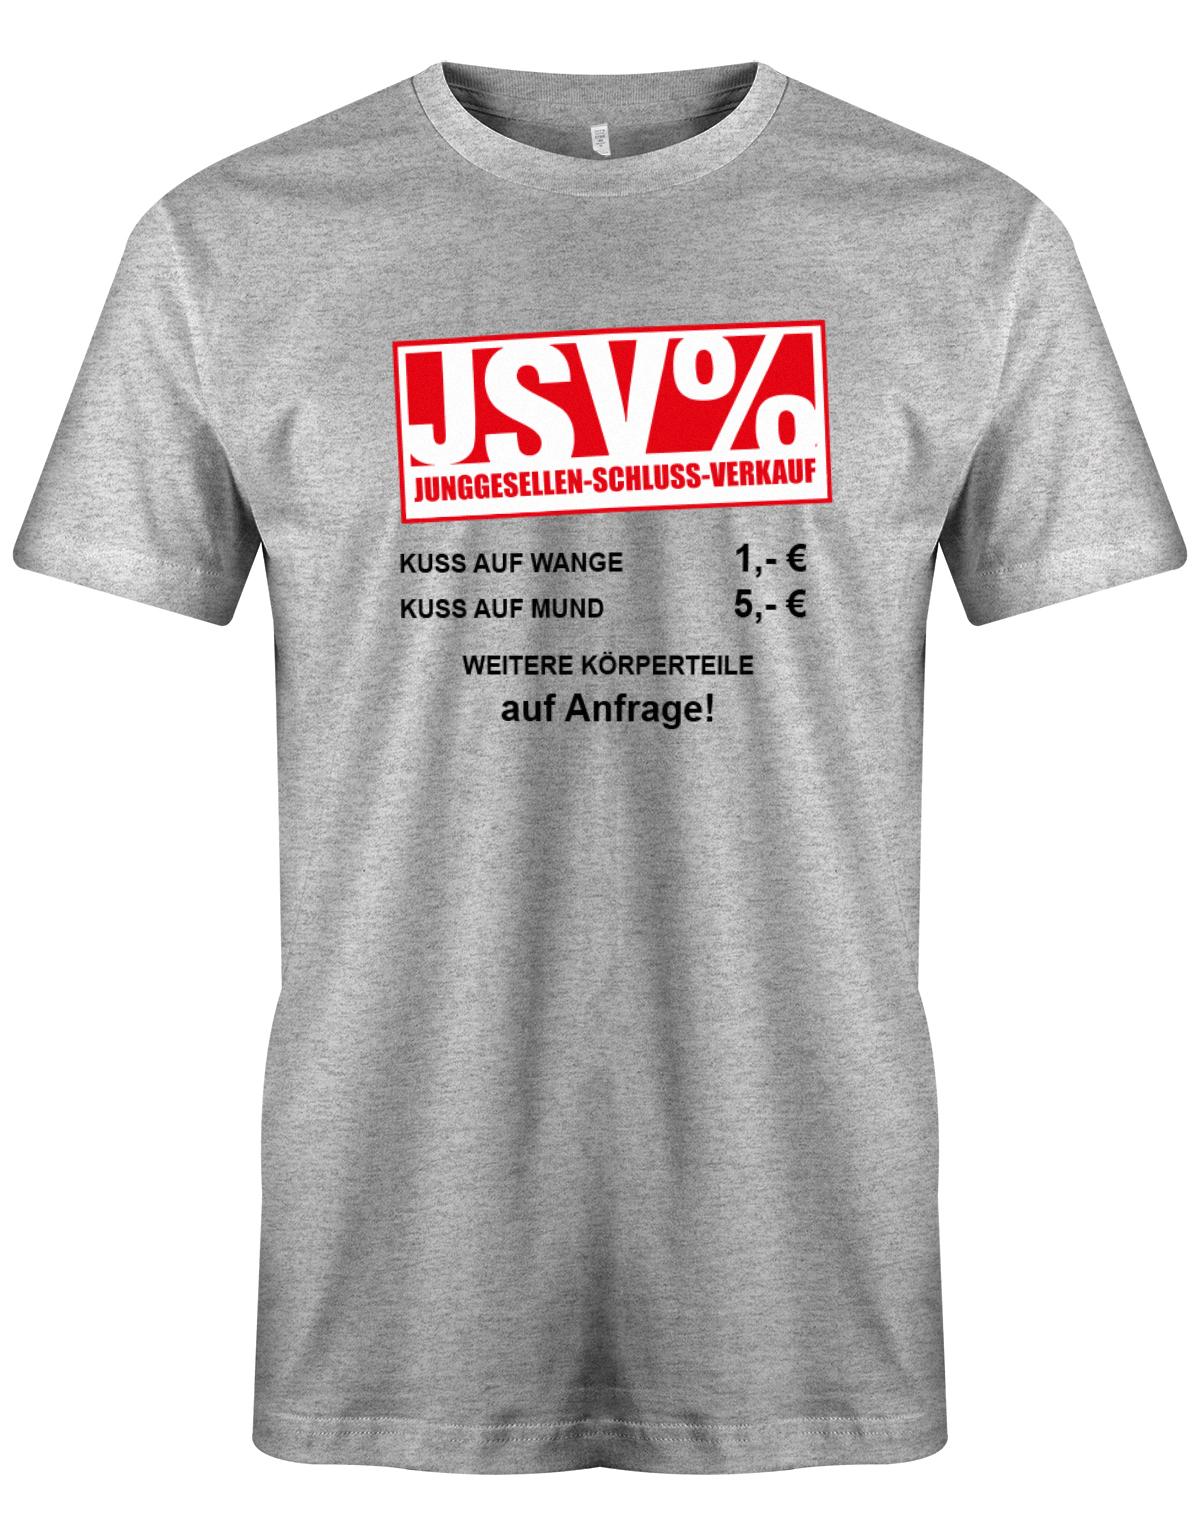 JSV-Kuss-auf-Wange-1-Euro-auf-Mund-5-Euro-Herren-JGA-Shirt-Grau